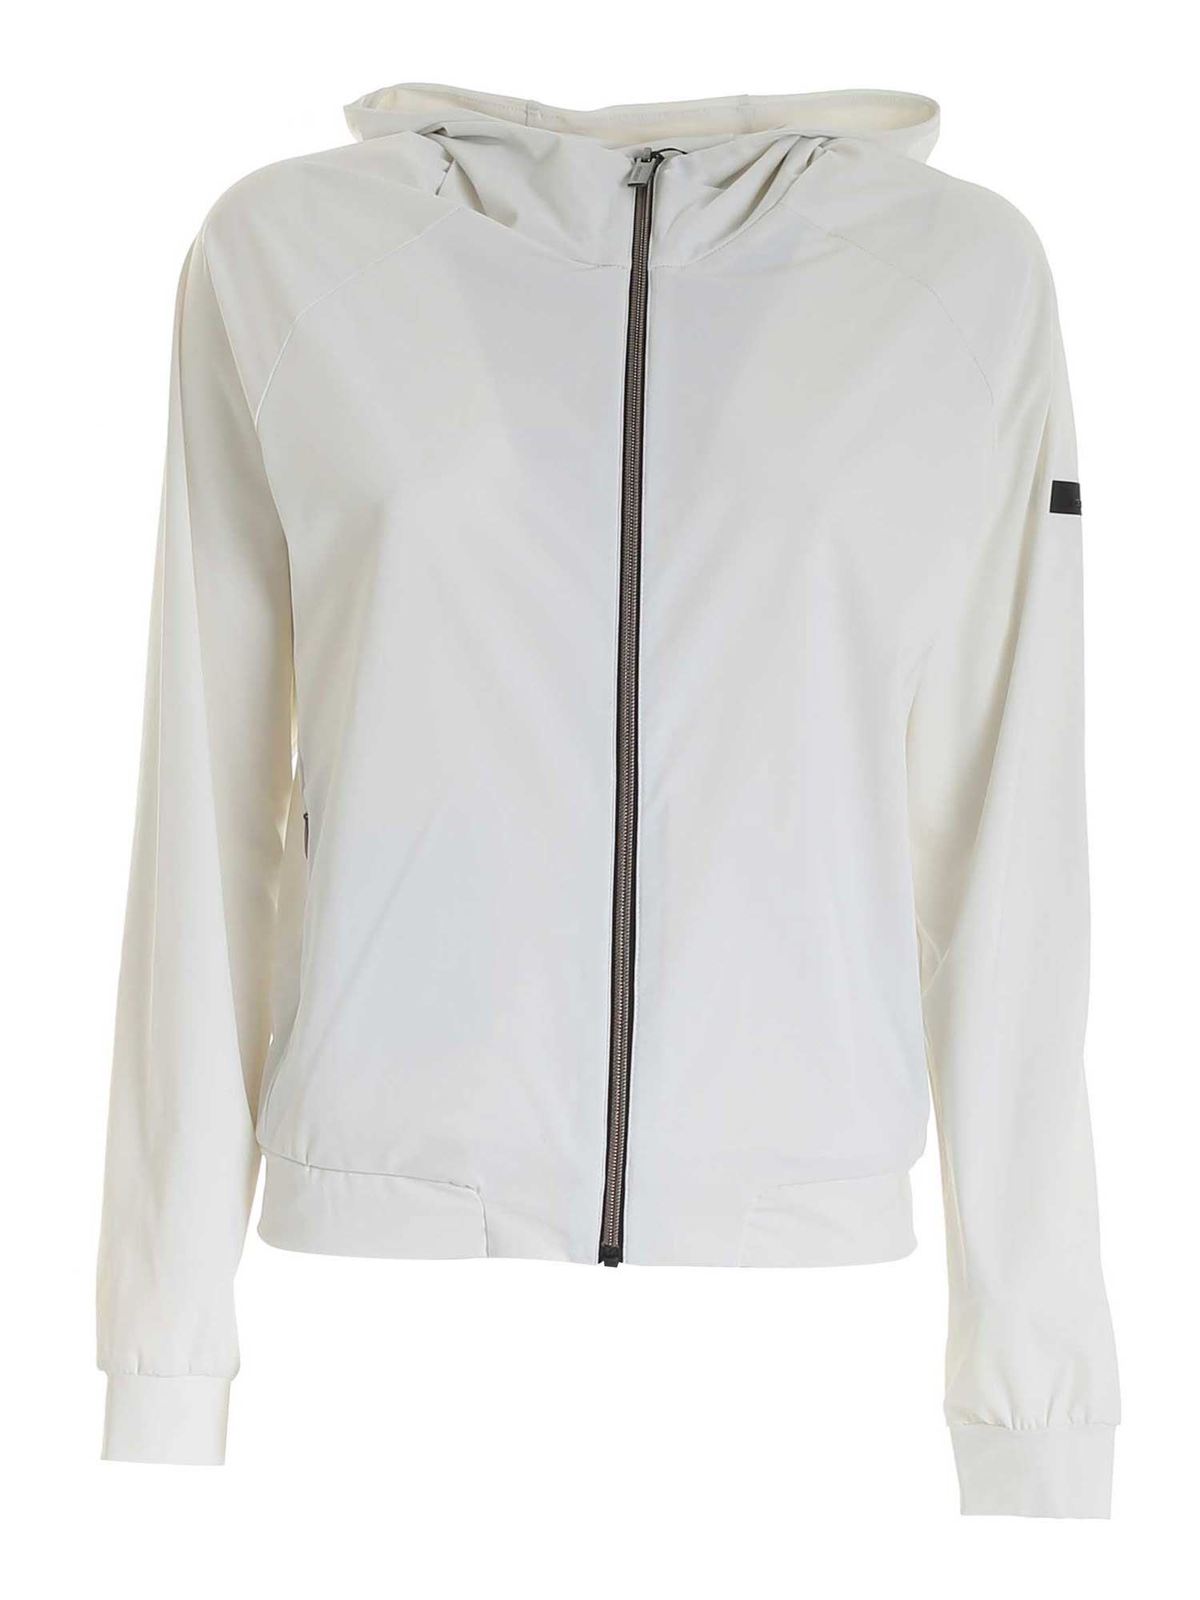 RRD Roberto Ricci Designs - Logo jacket in white - casual jackets - 2160009